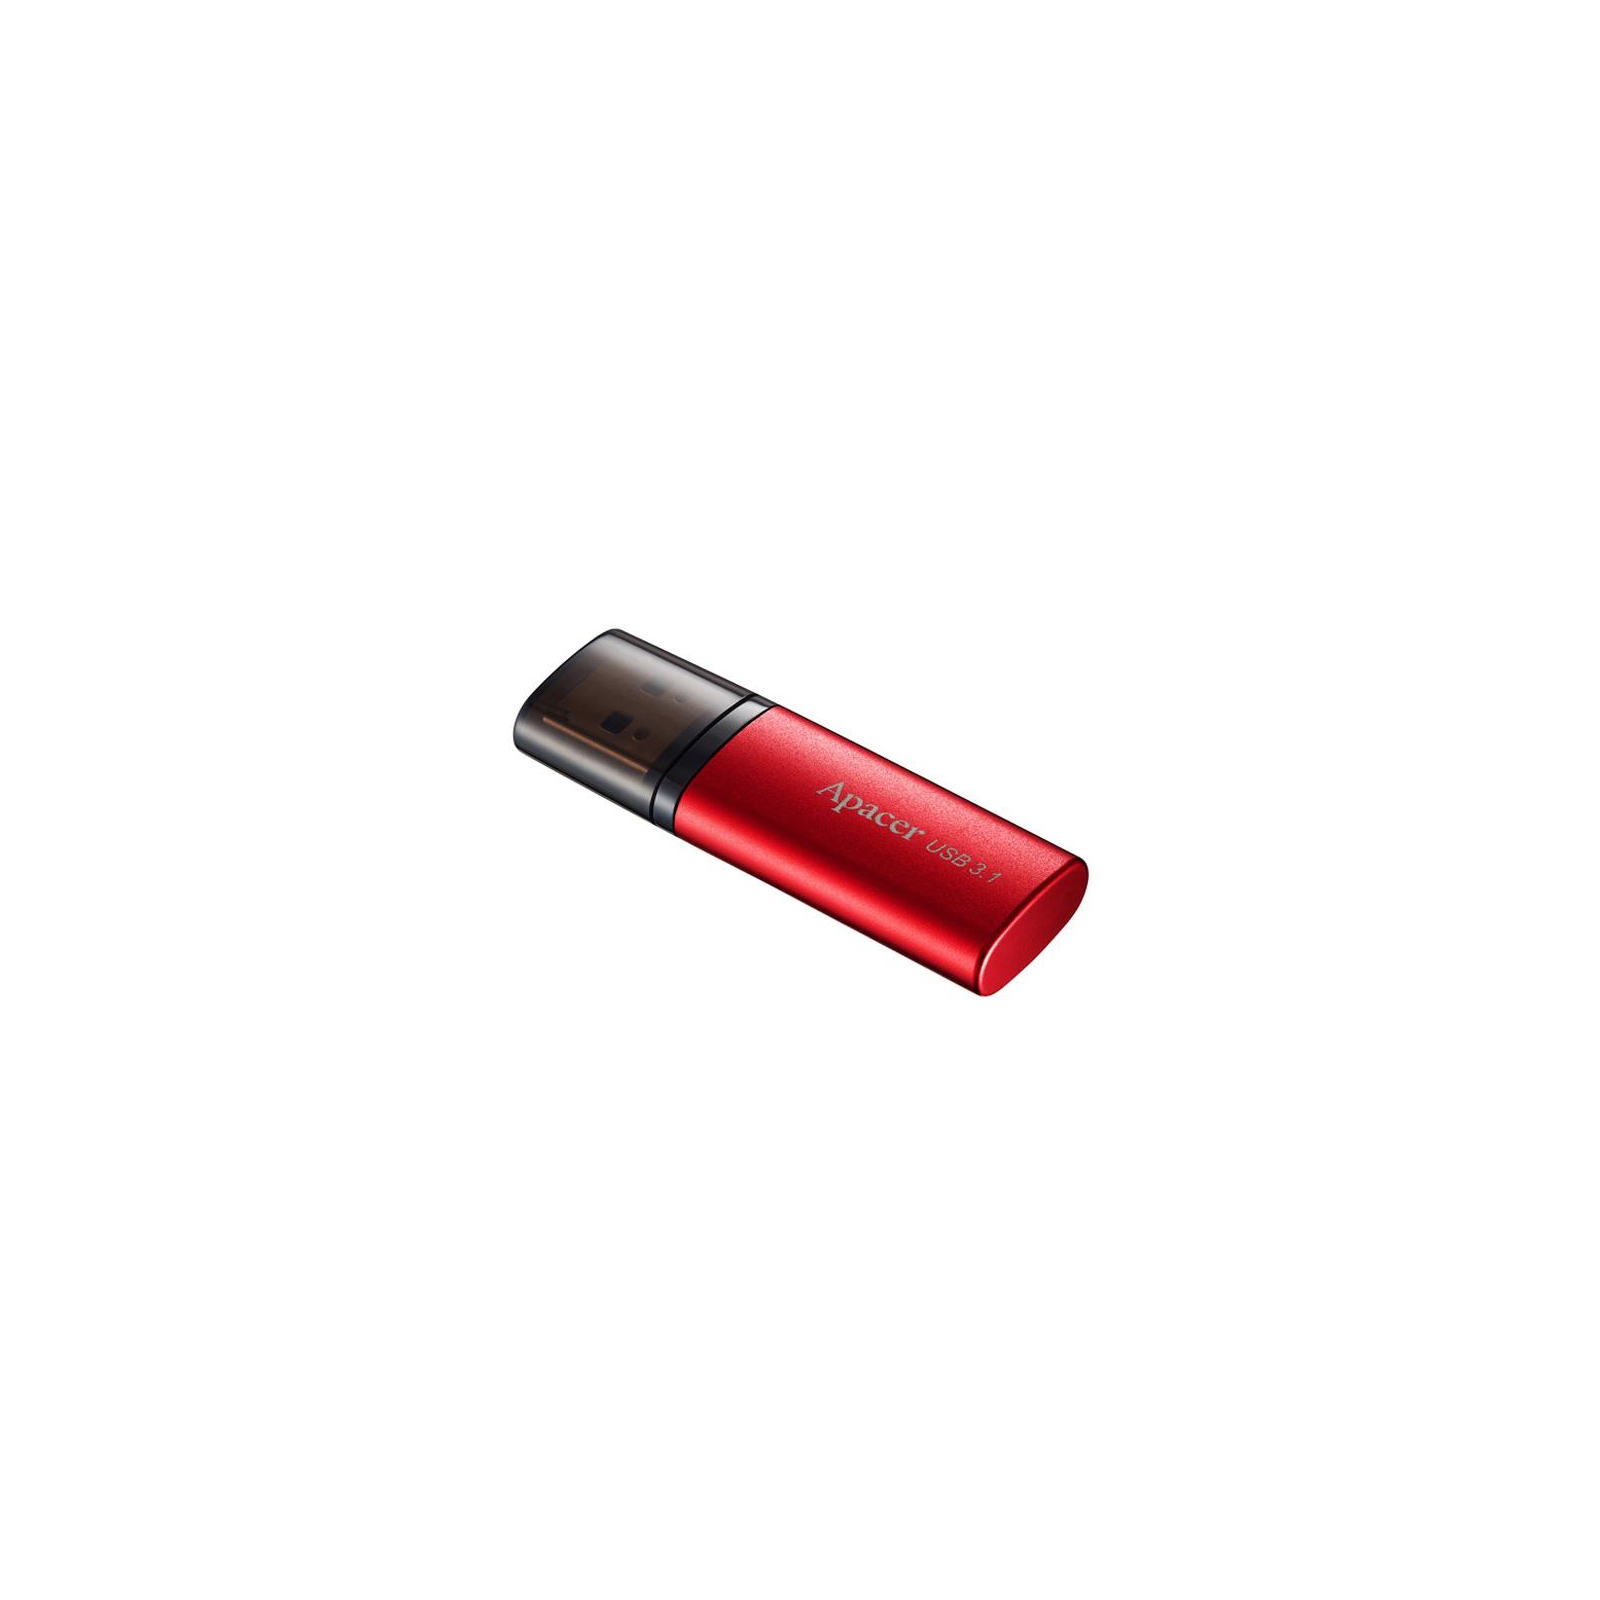 USB флеш накопитель Apacer 32GB AH25B Red USB 3.1 Gen1 (AP32GAH25BR-1) изображение 2